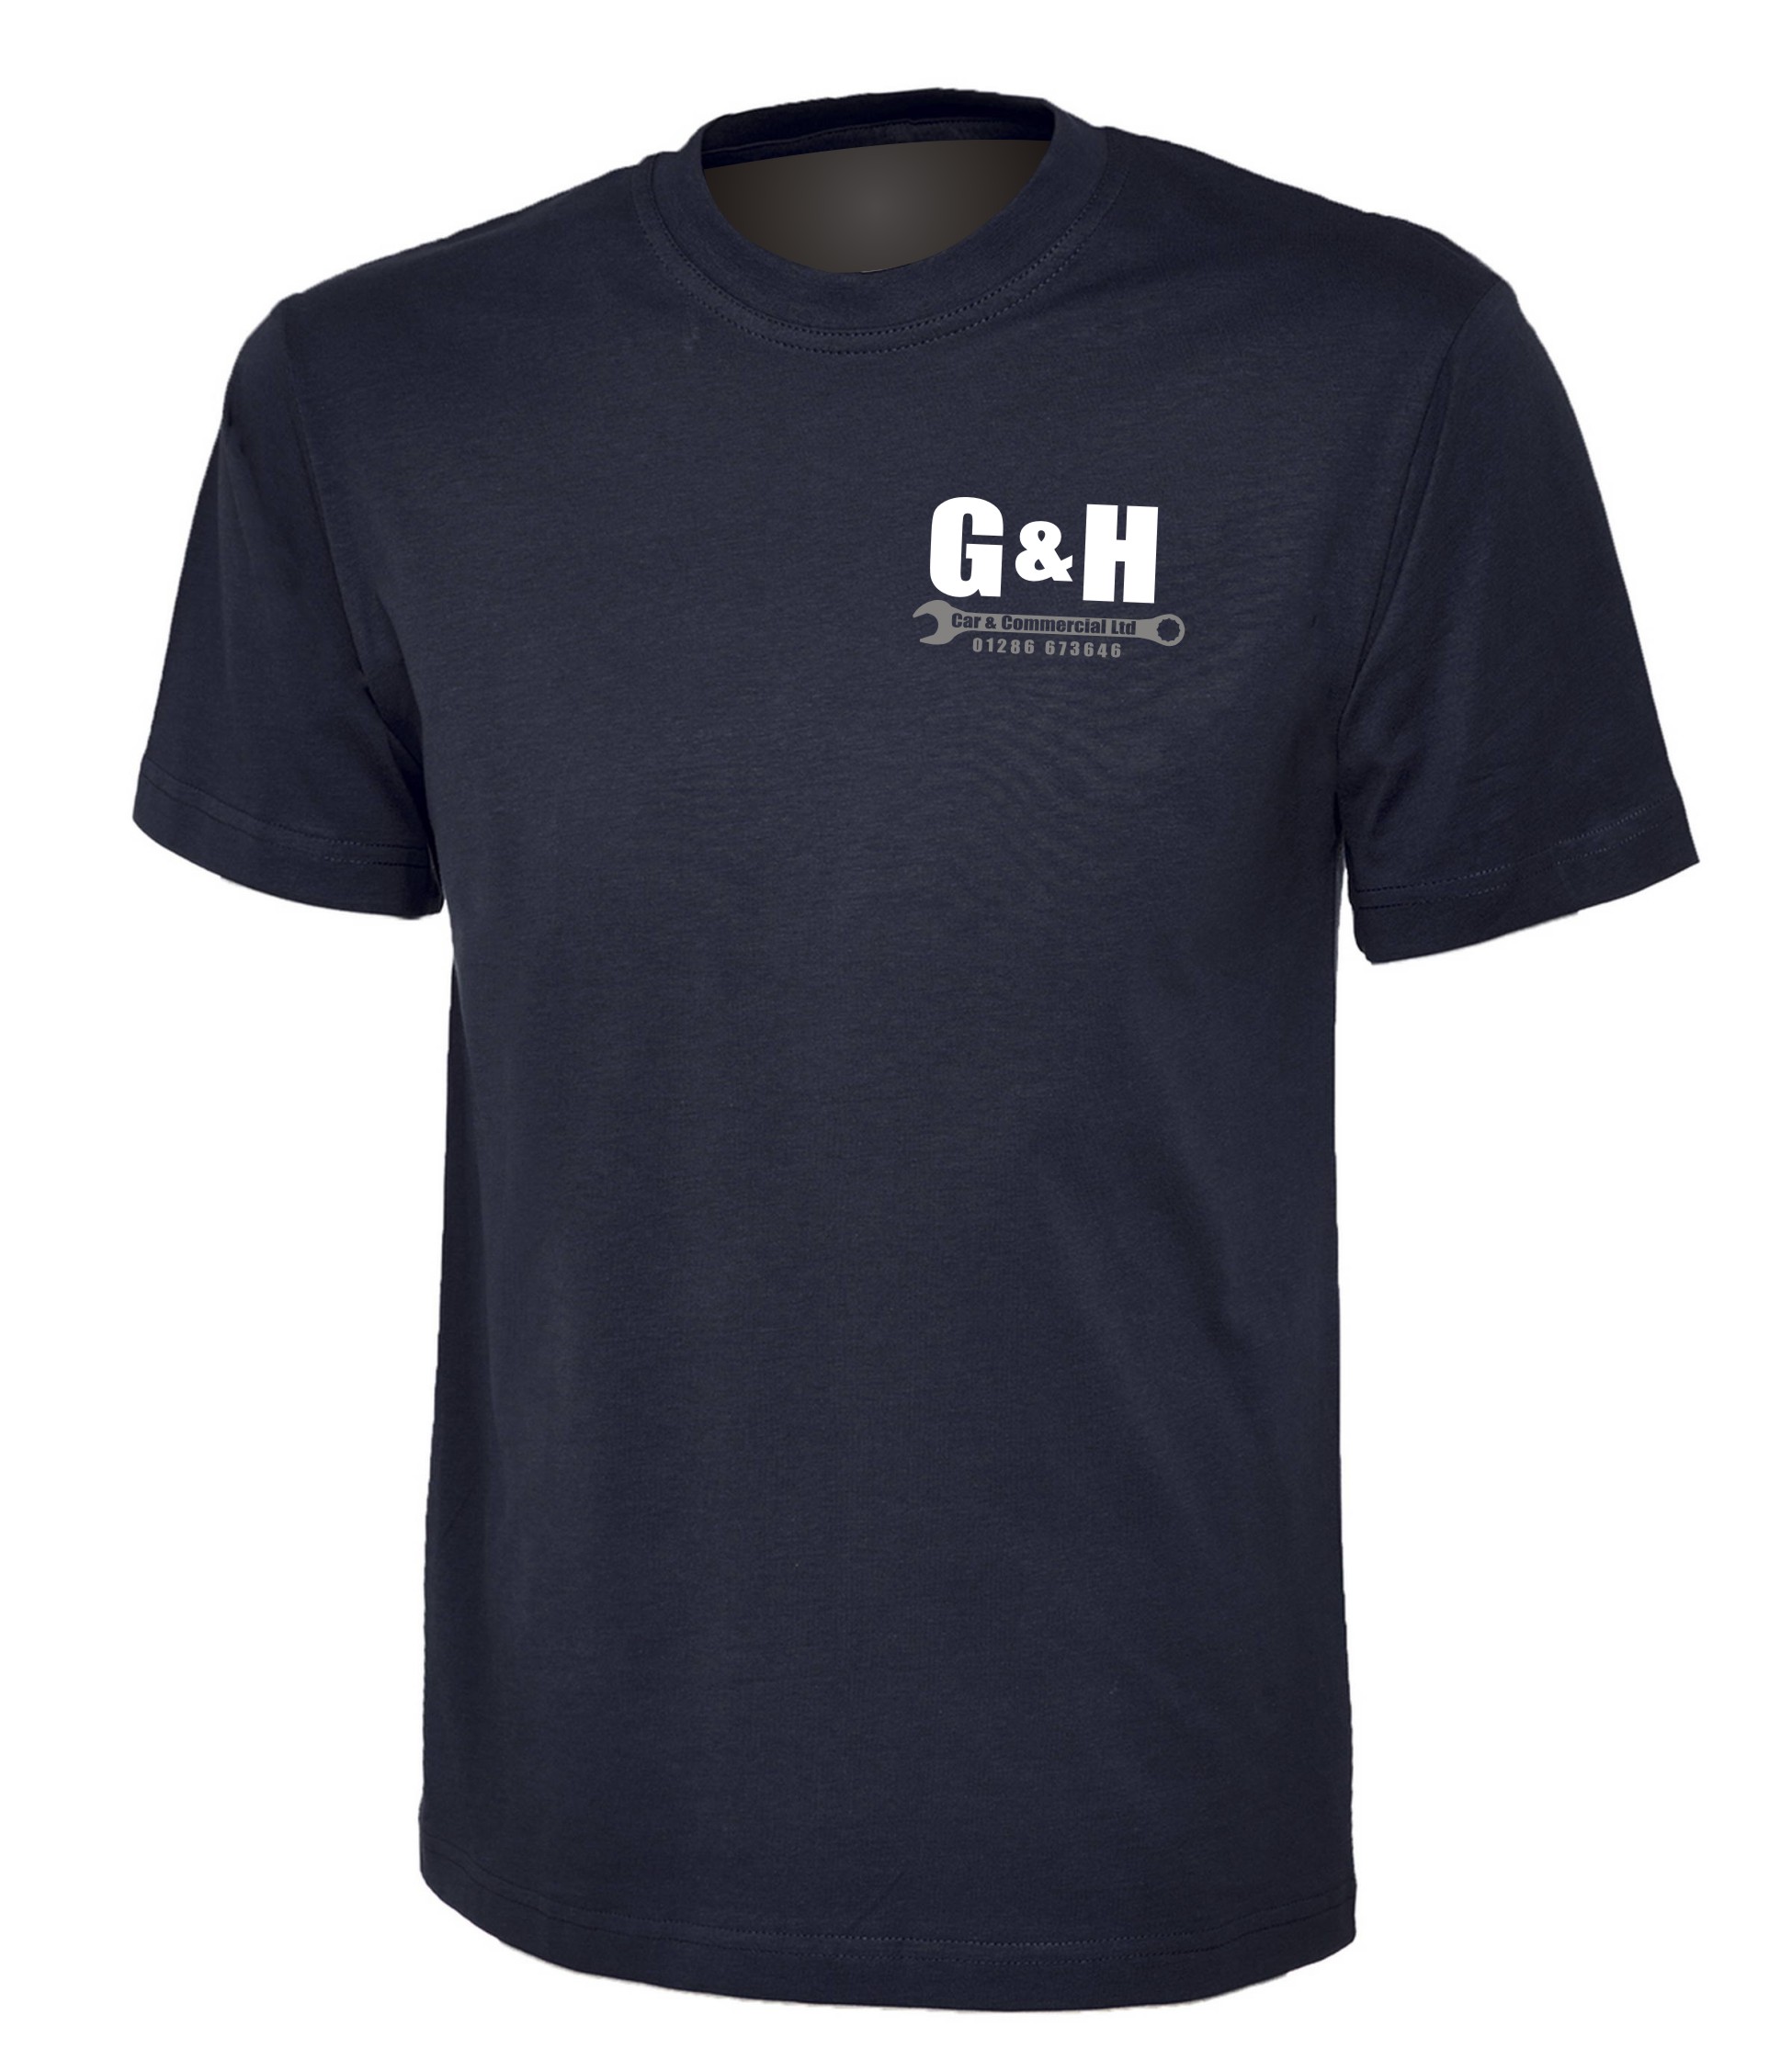 G&H T-Shirt - Teejac